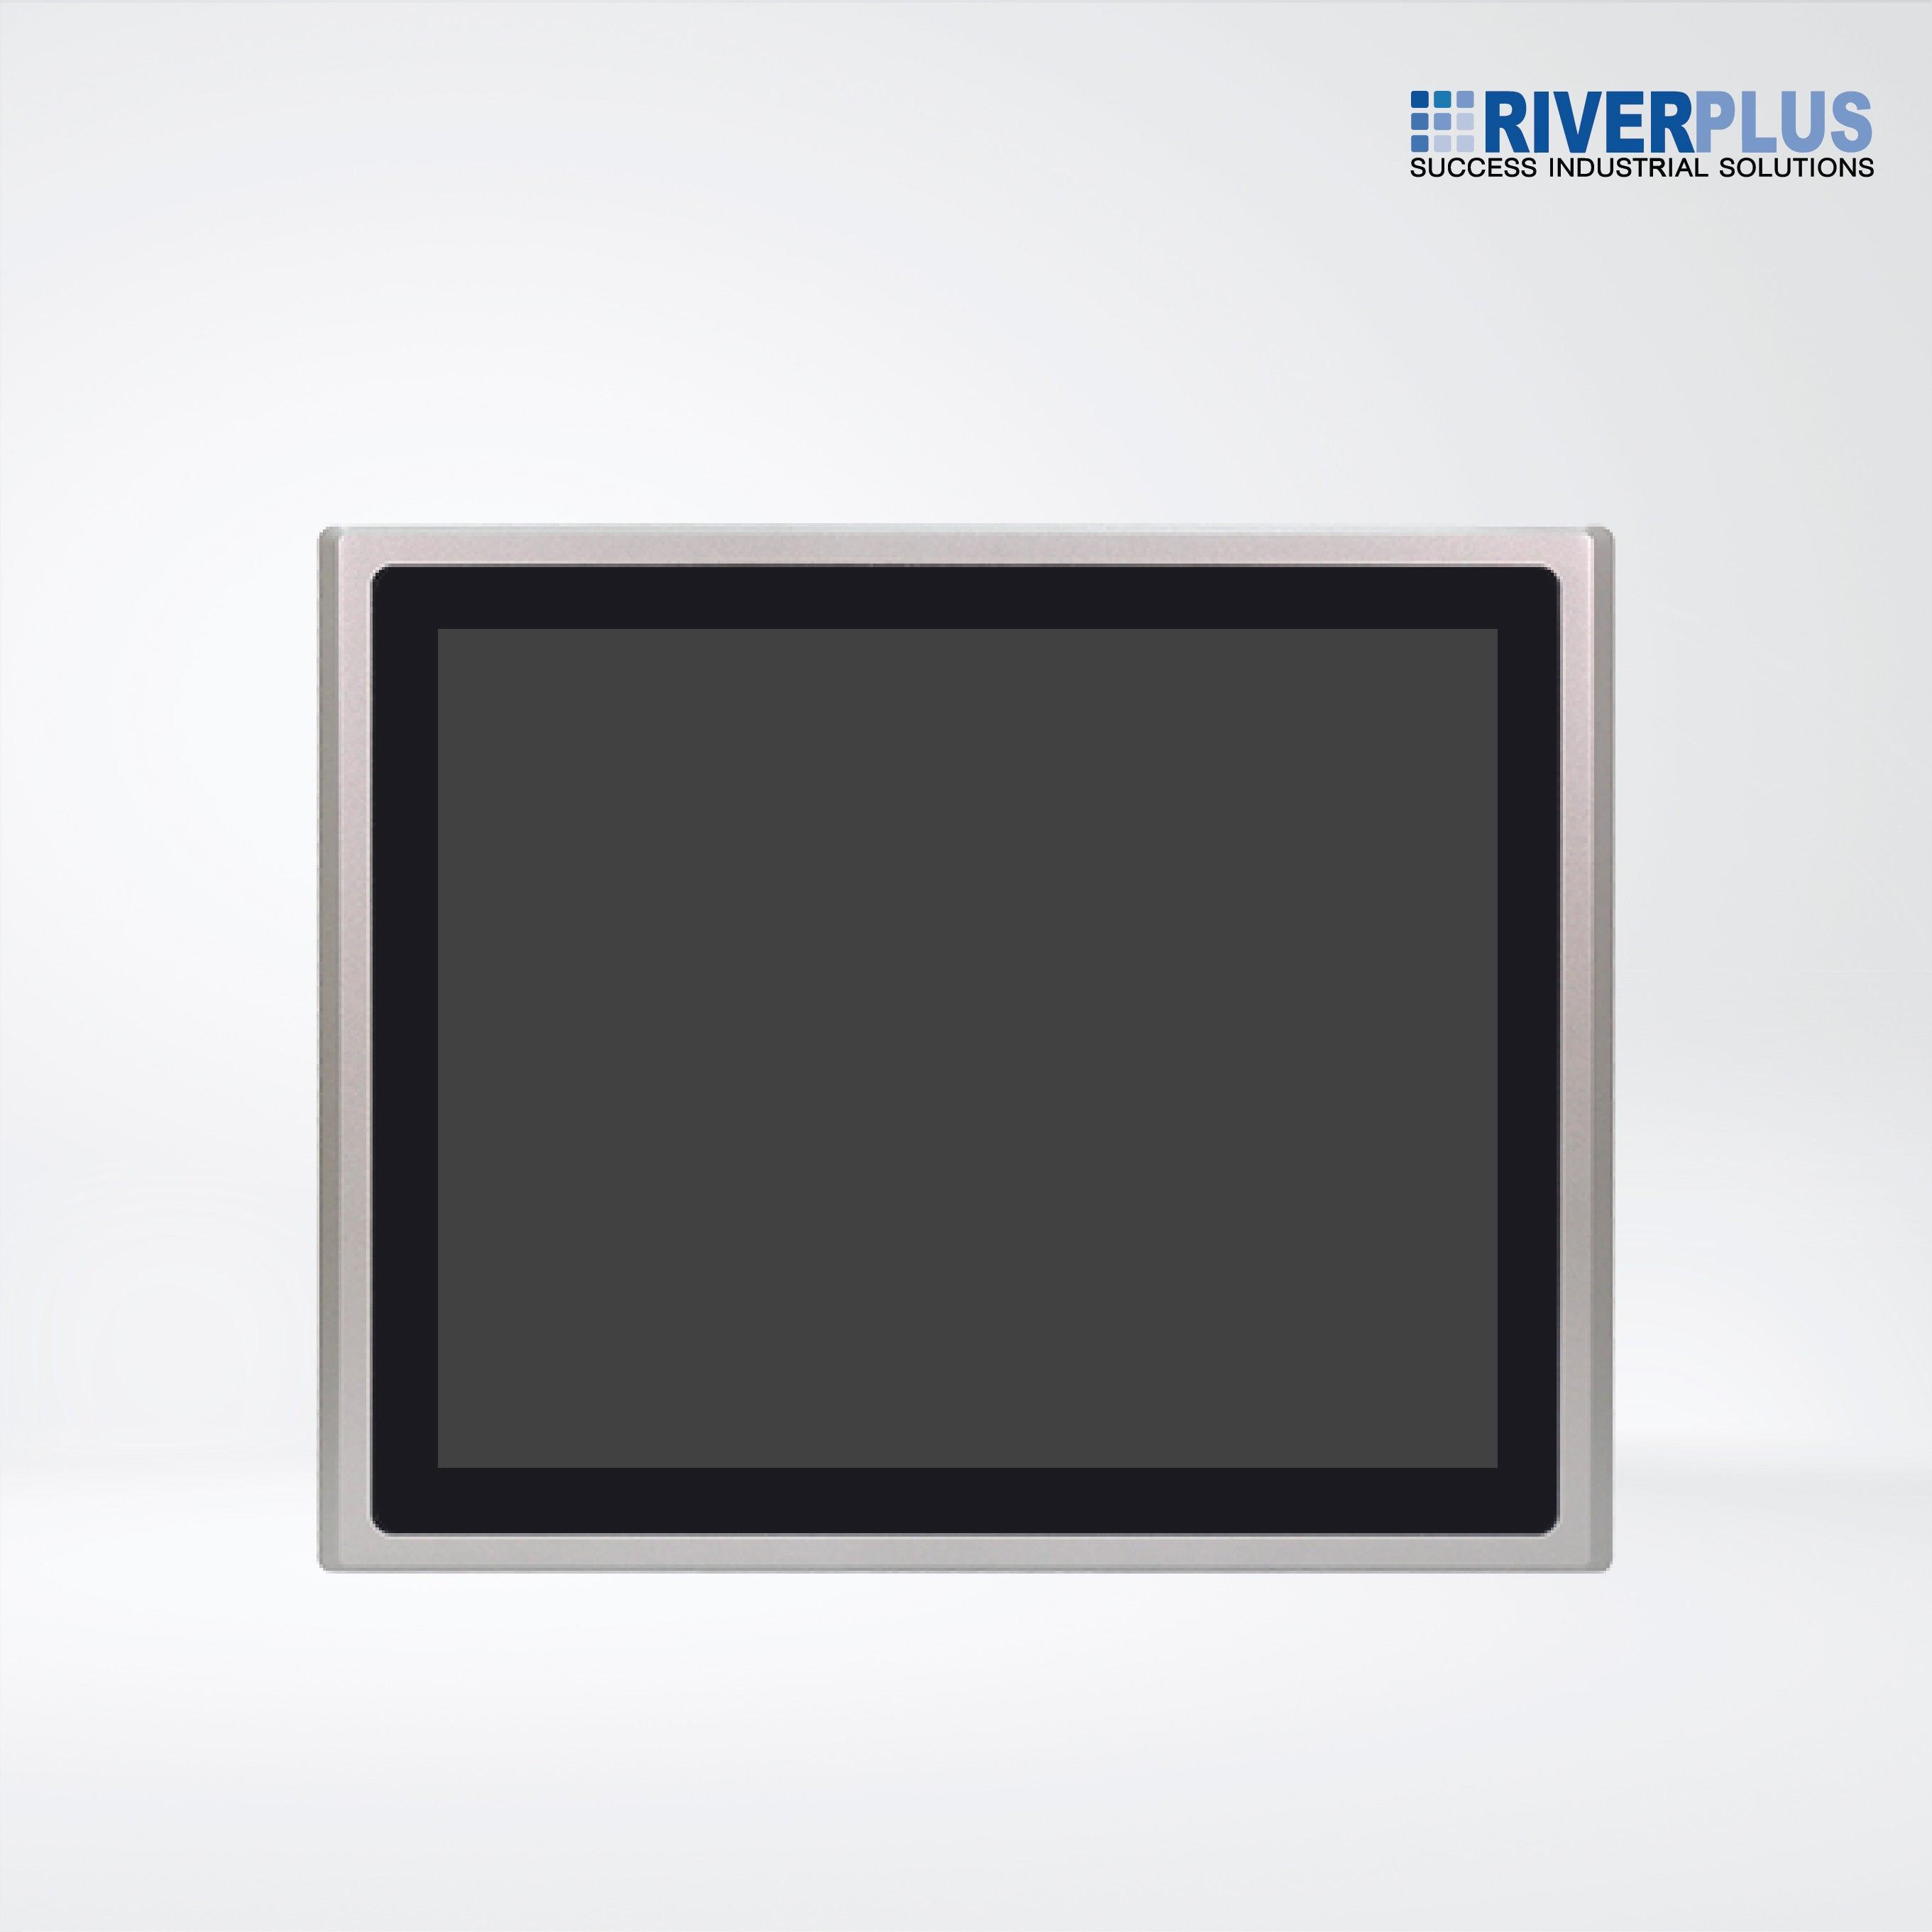 ARCHMI-919ARH 6th Gen. Intel Core i3/i5, Fanless Industrial Compact Size Panel PC - Riverplus